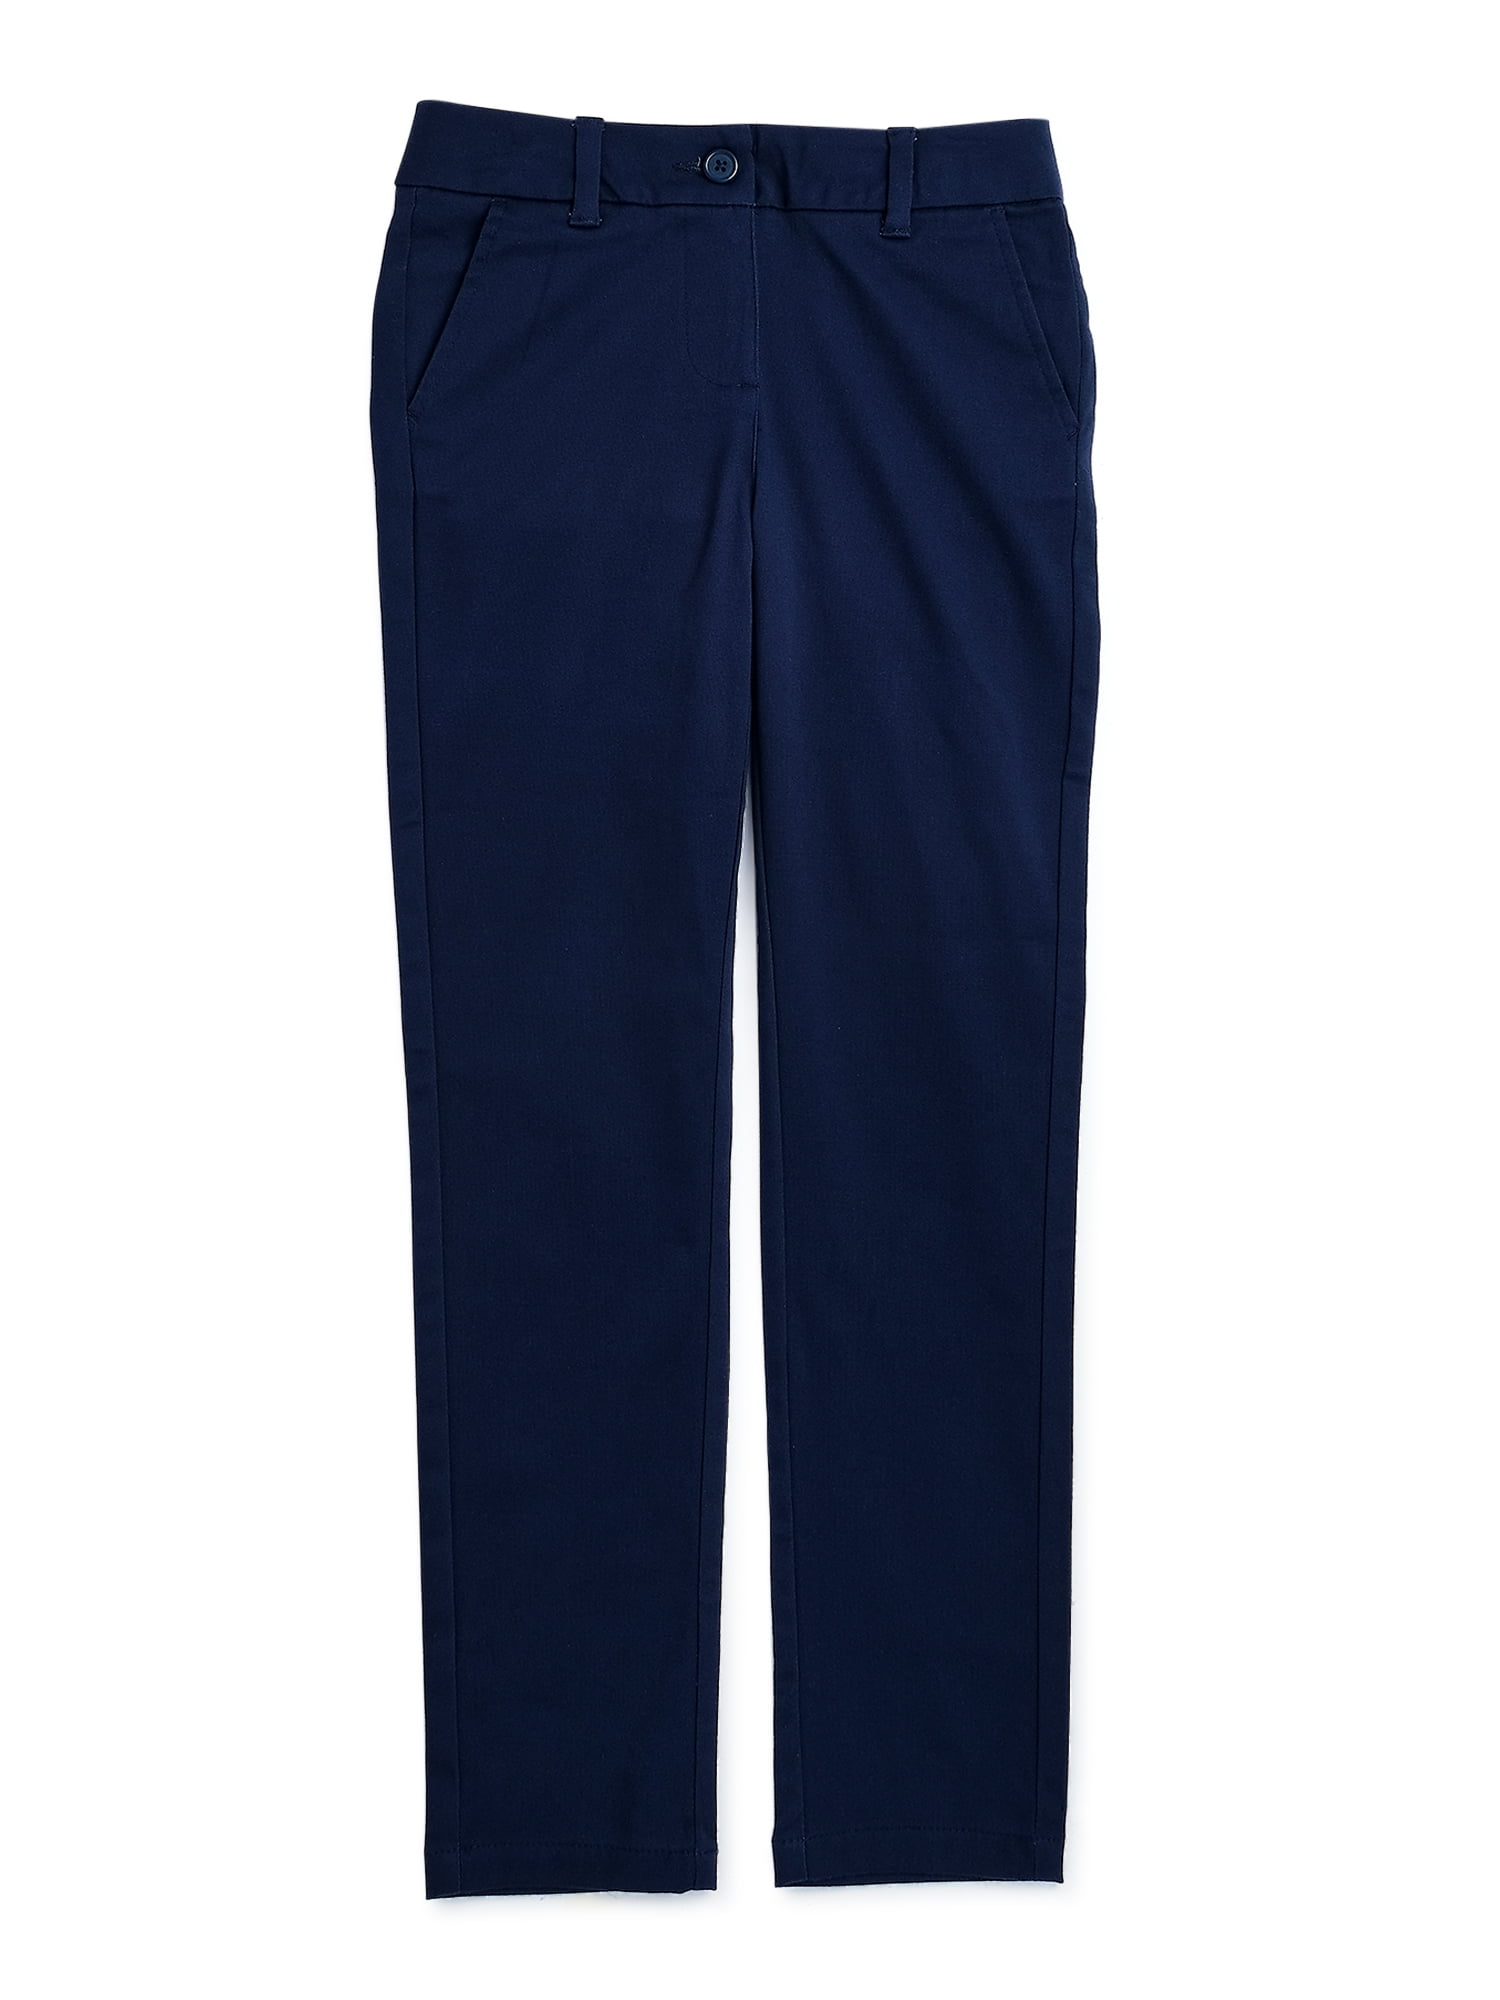 Wholesale Junior Girls' Plus Uniform Pants, Navy, 16-22 - DollarDays